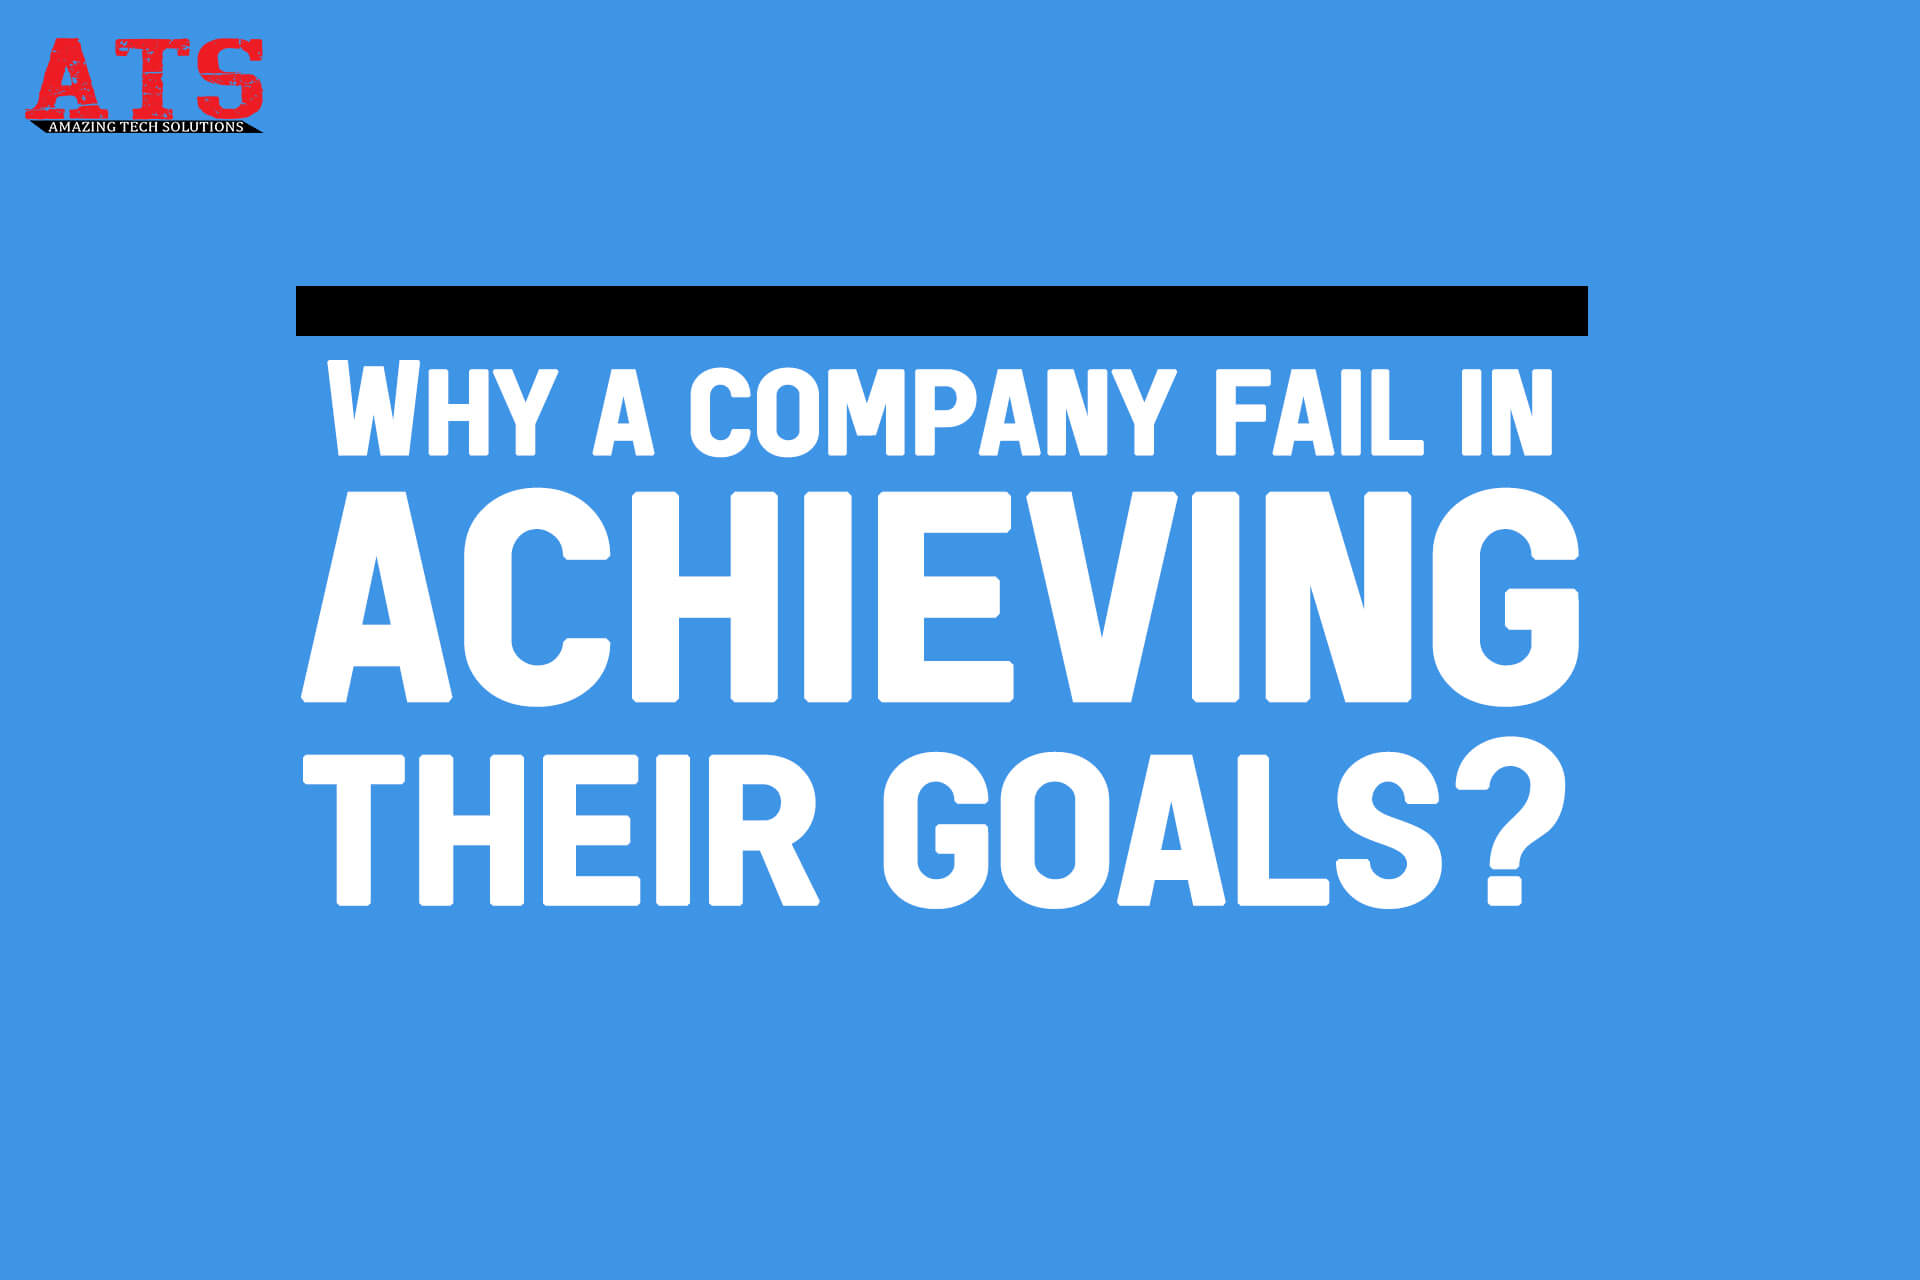 Why a company fail in achieving their goals?